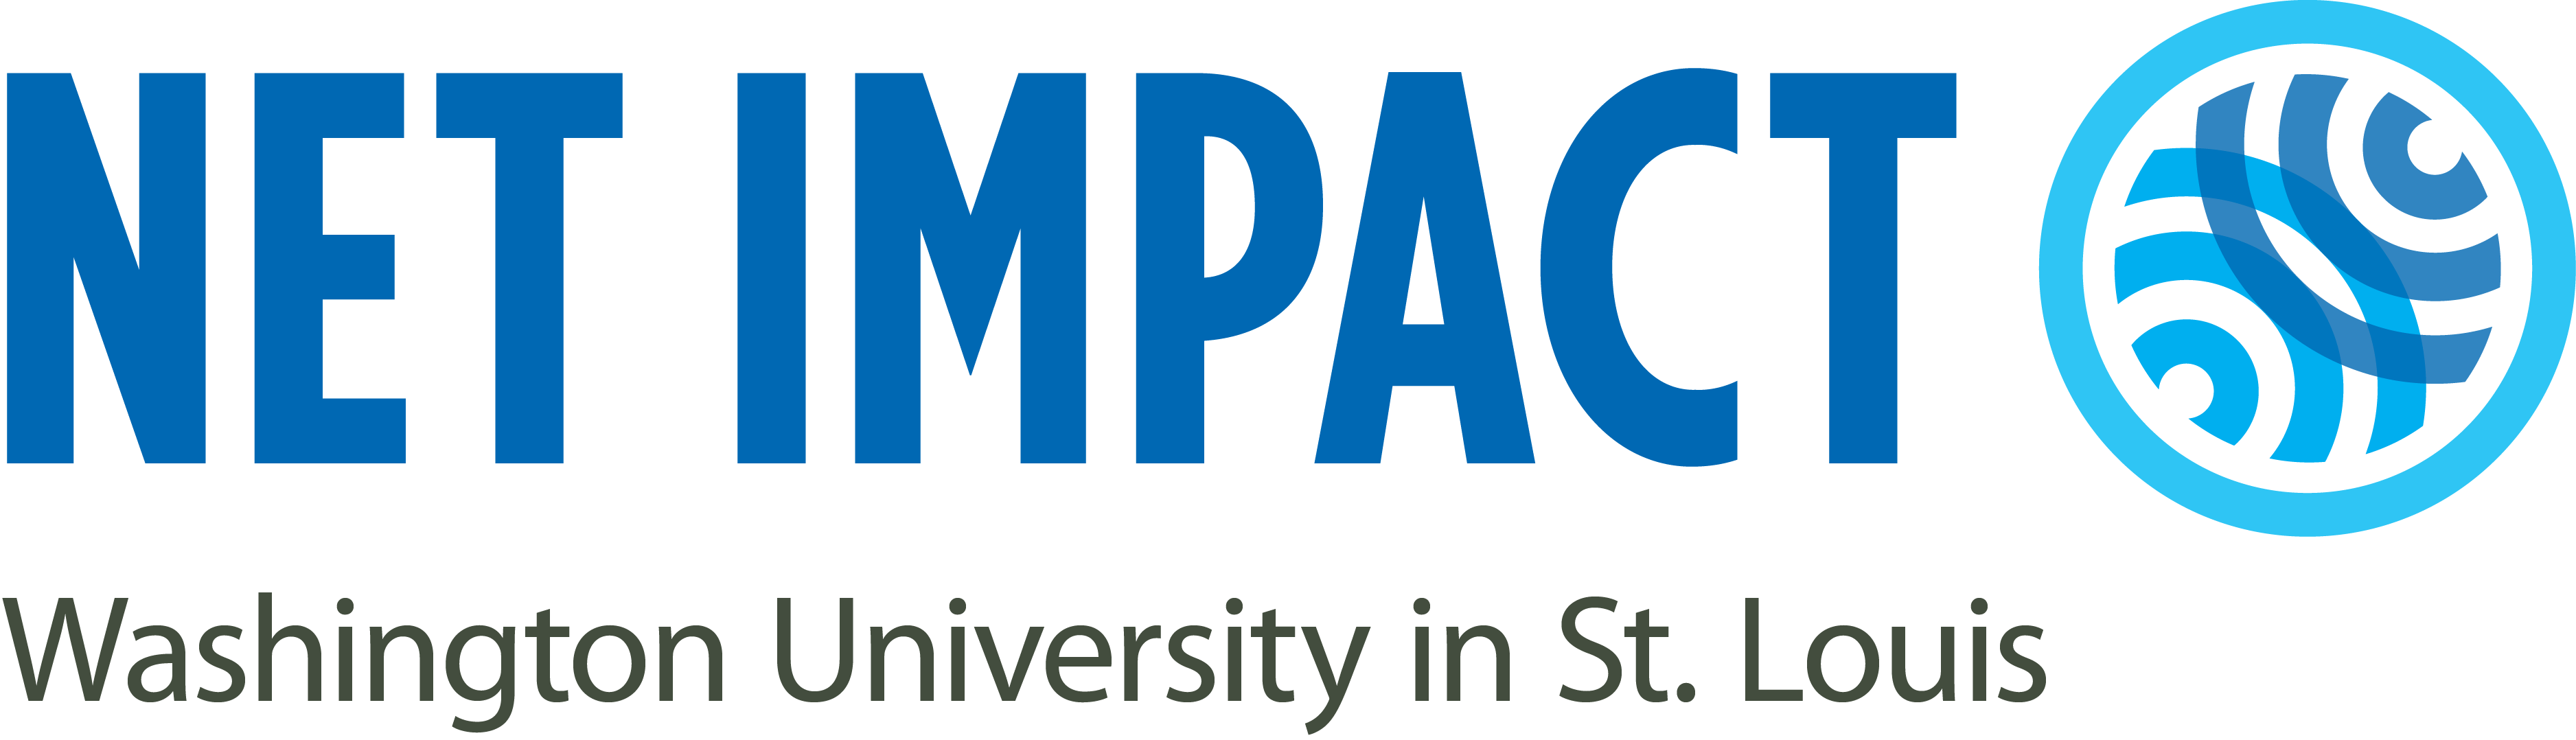 Washington University in st. Louis Net Impact undergraduate